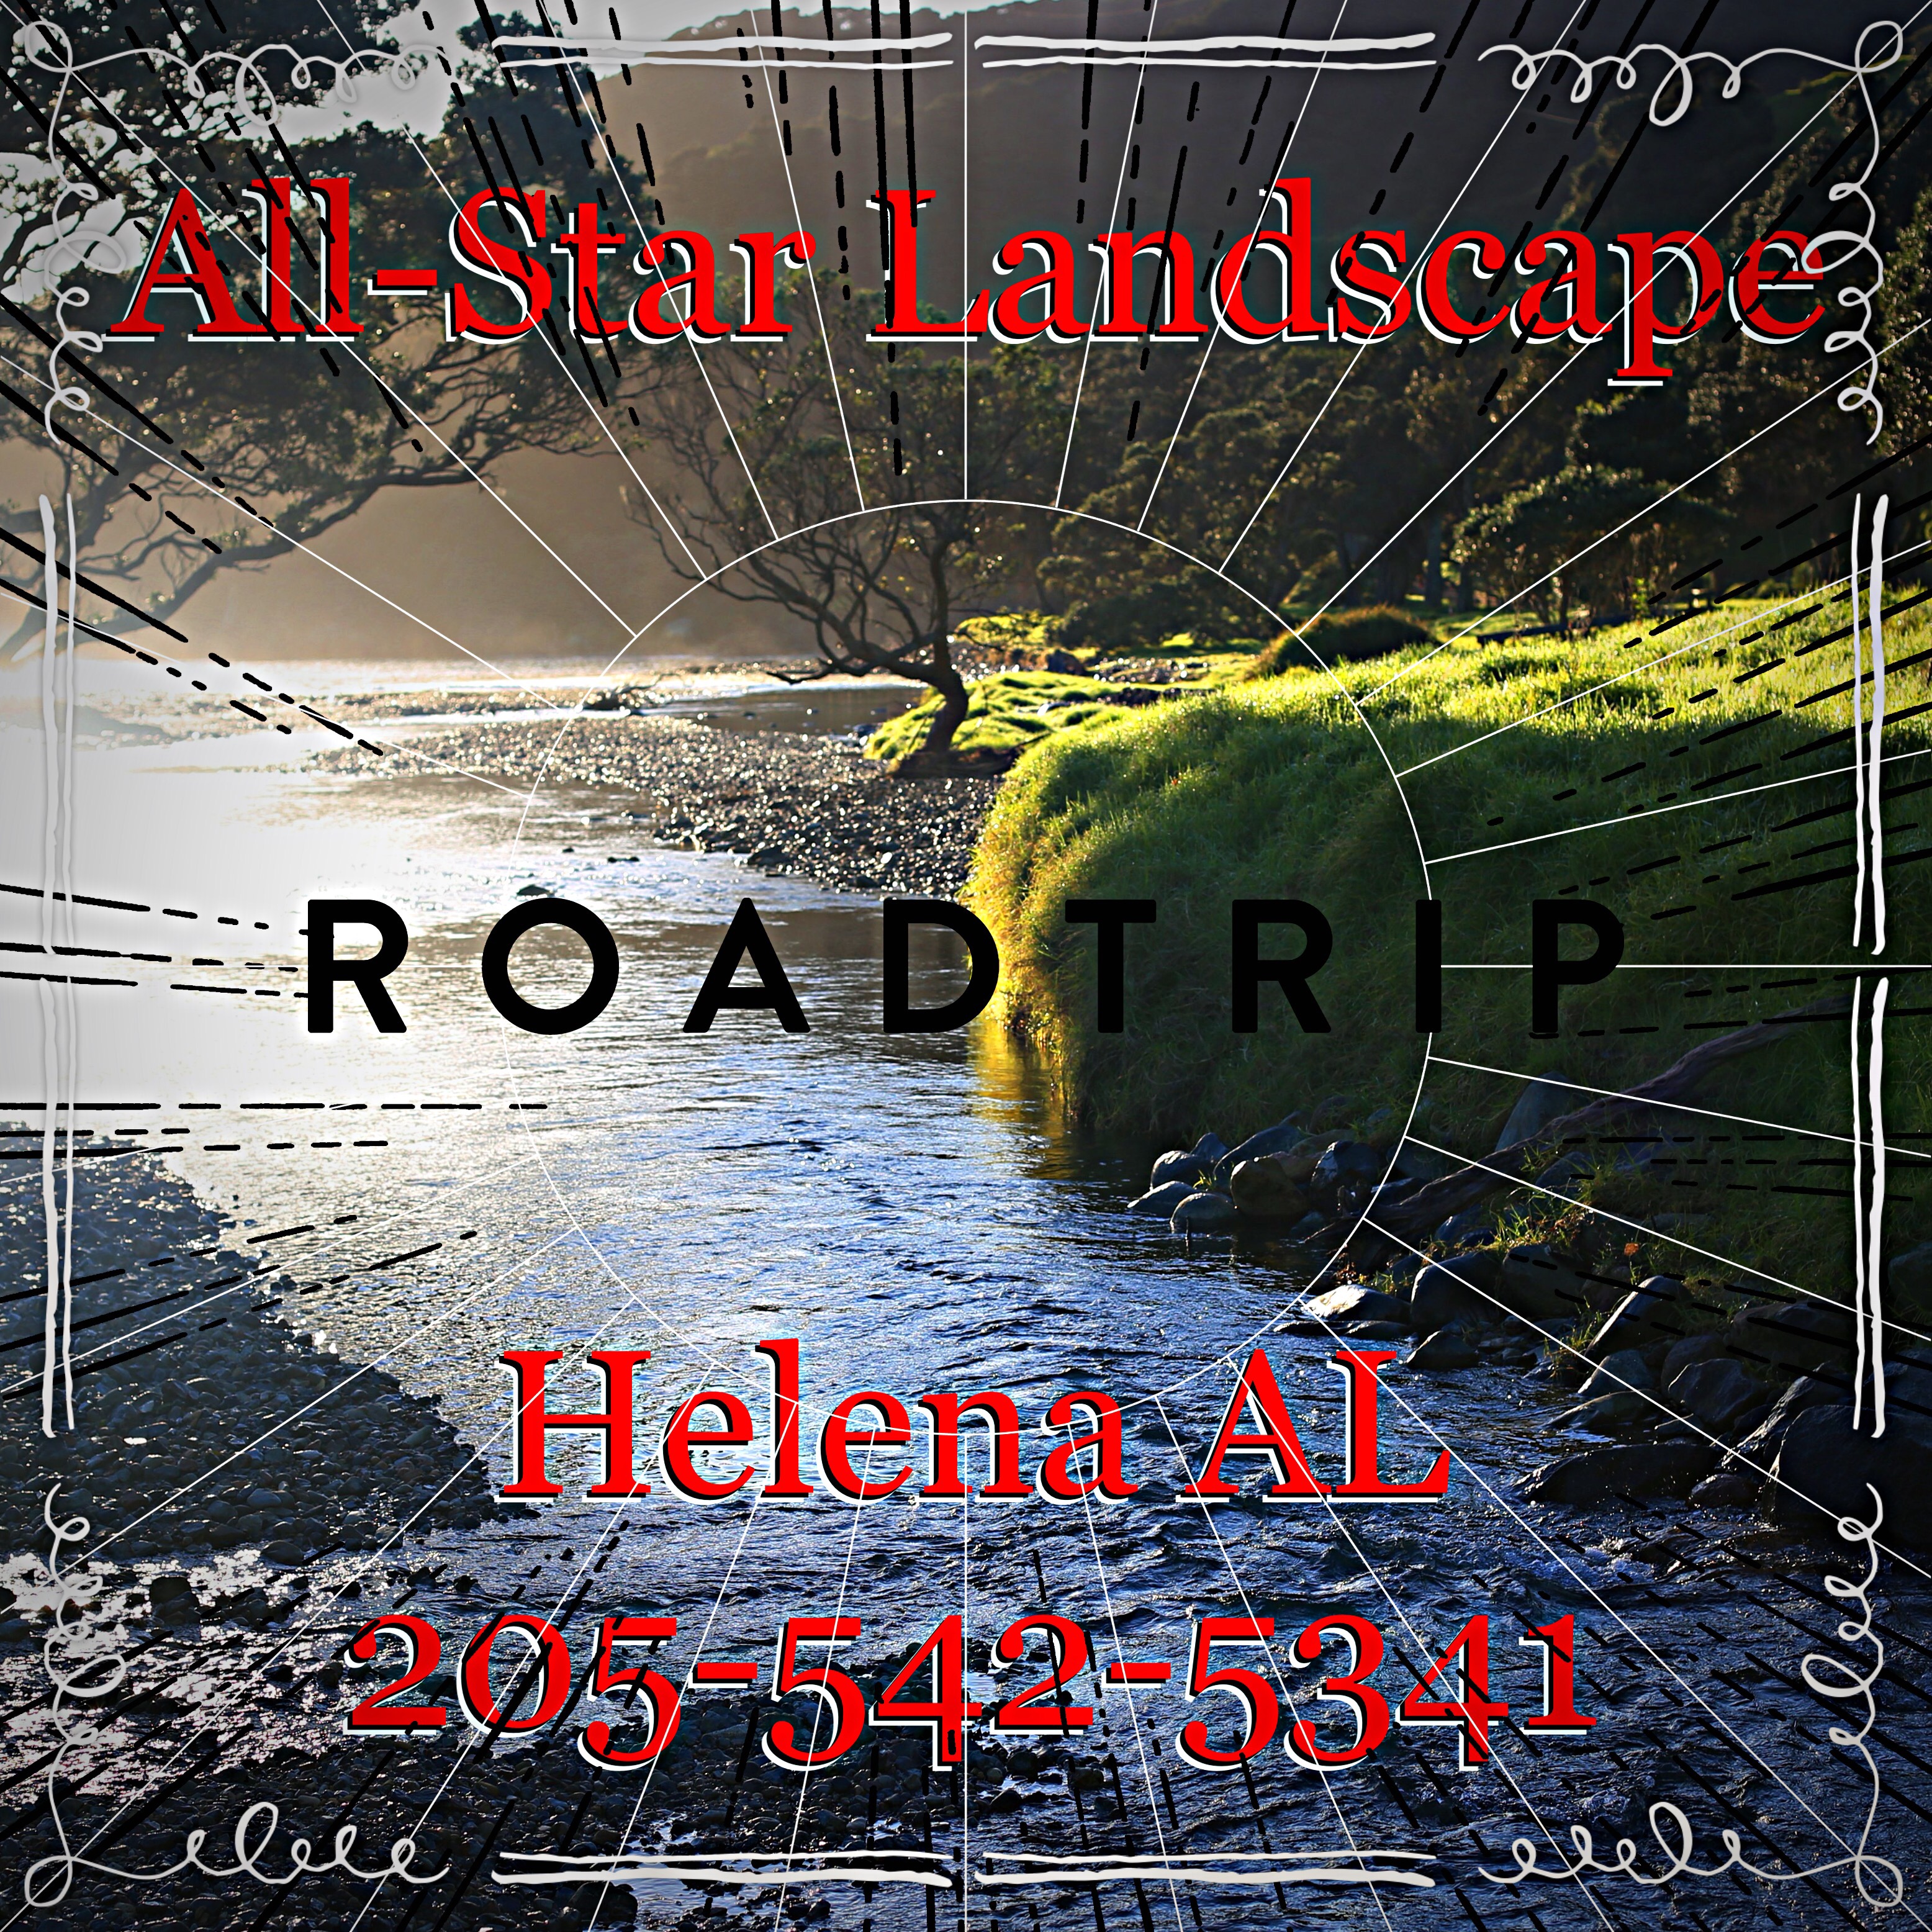 ALL-STAR LANDSCAPE • HELENA ALABAMA • [205]542-4341